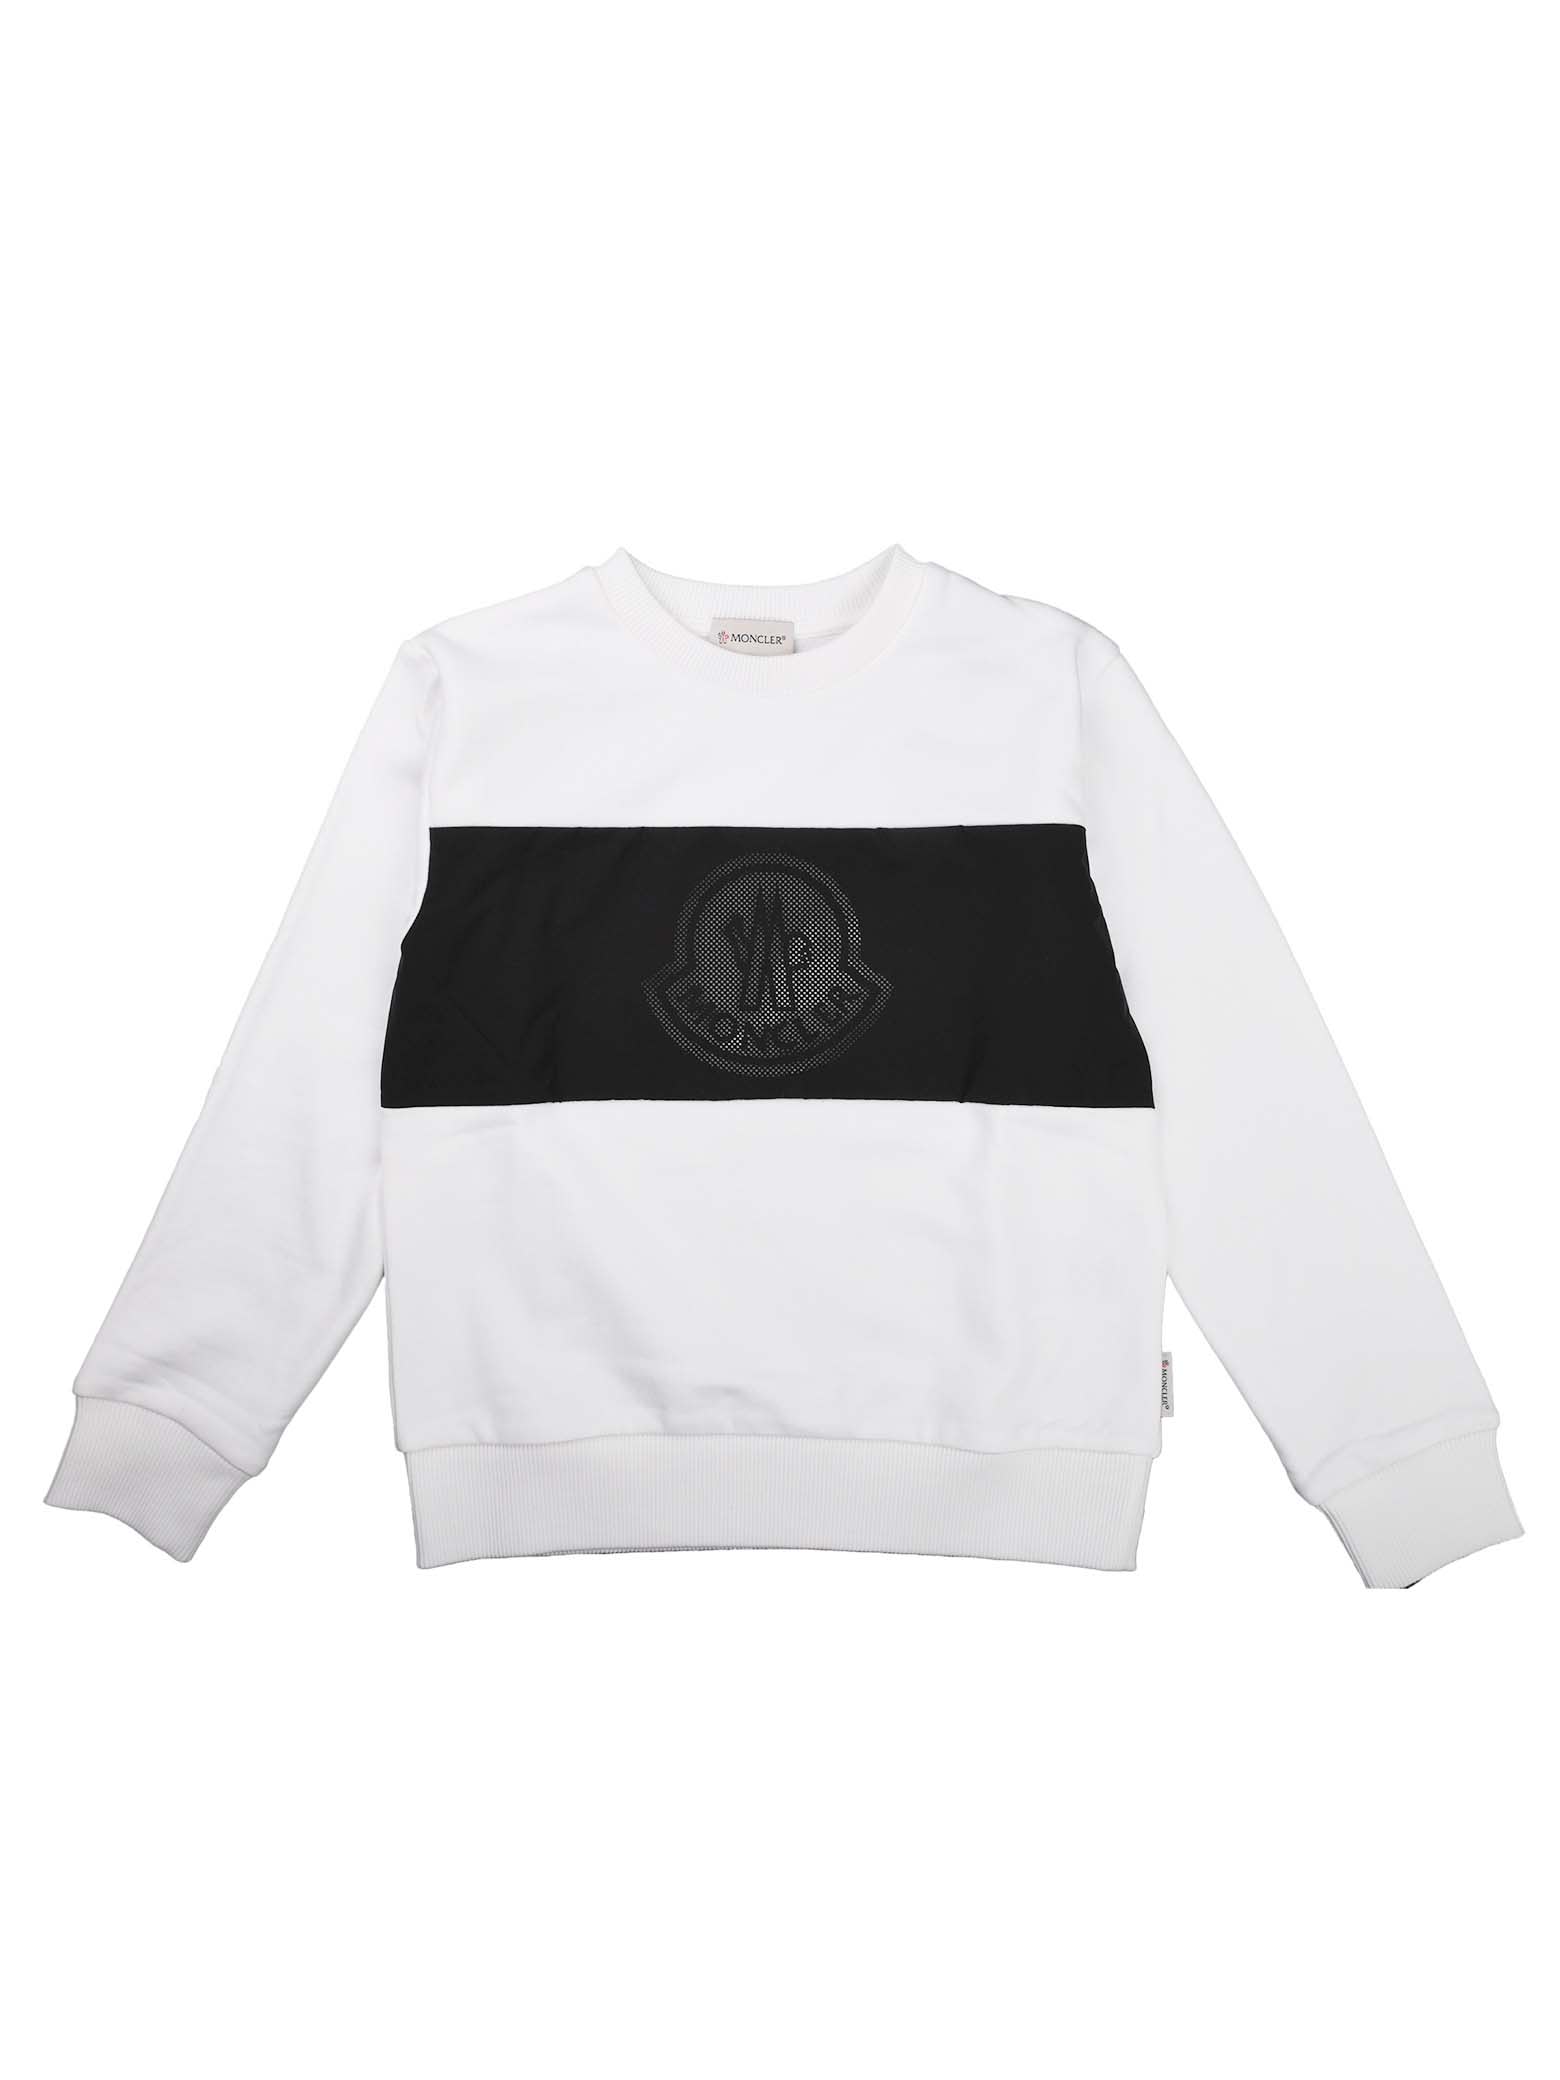 Moncler Black And White Crew Neck Sweatshirt